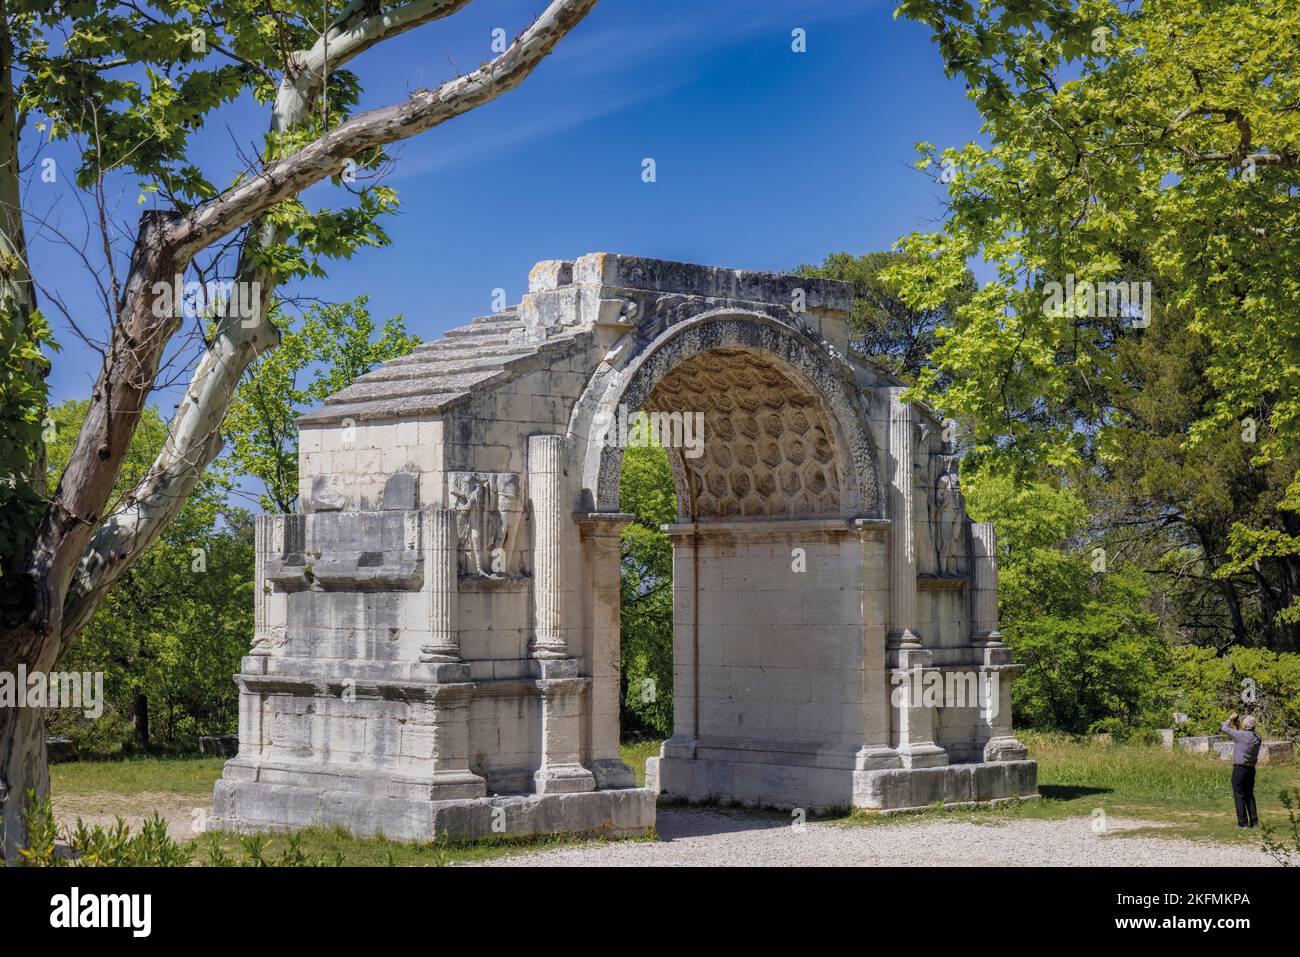 Saint-Rémy-de-Provence, Bouches-du-Rhône, Provenza, Francia. L'Arco Municipale, un arco trionfale che era l'ingresso alla città romana di Glanum. Foto Stock